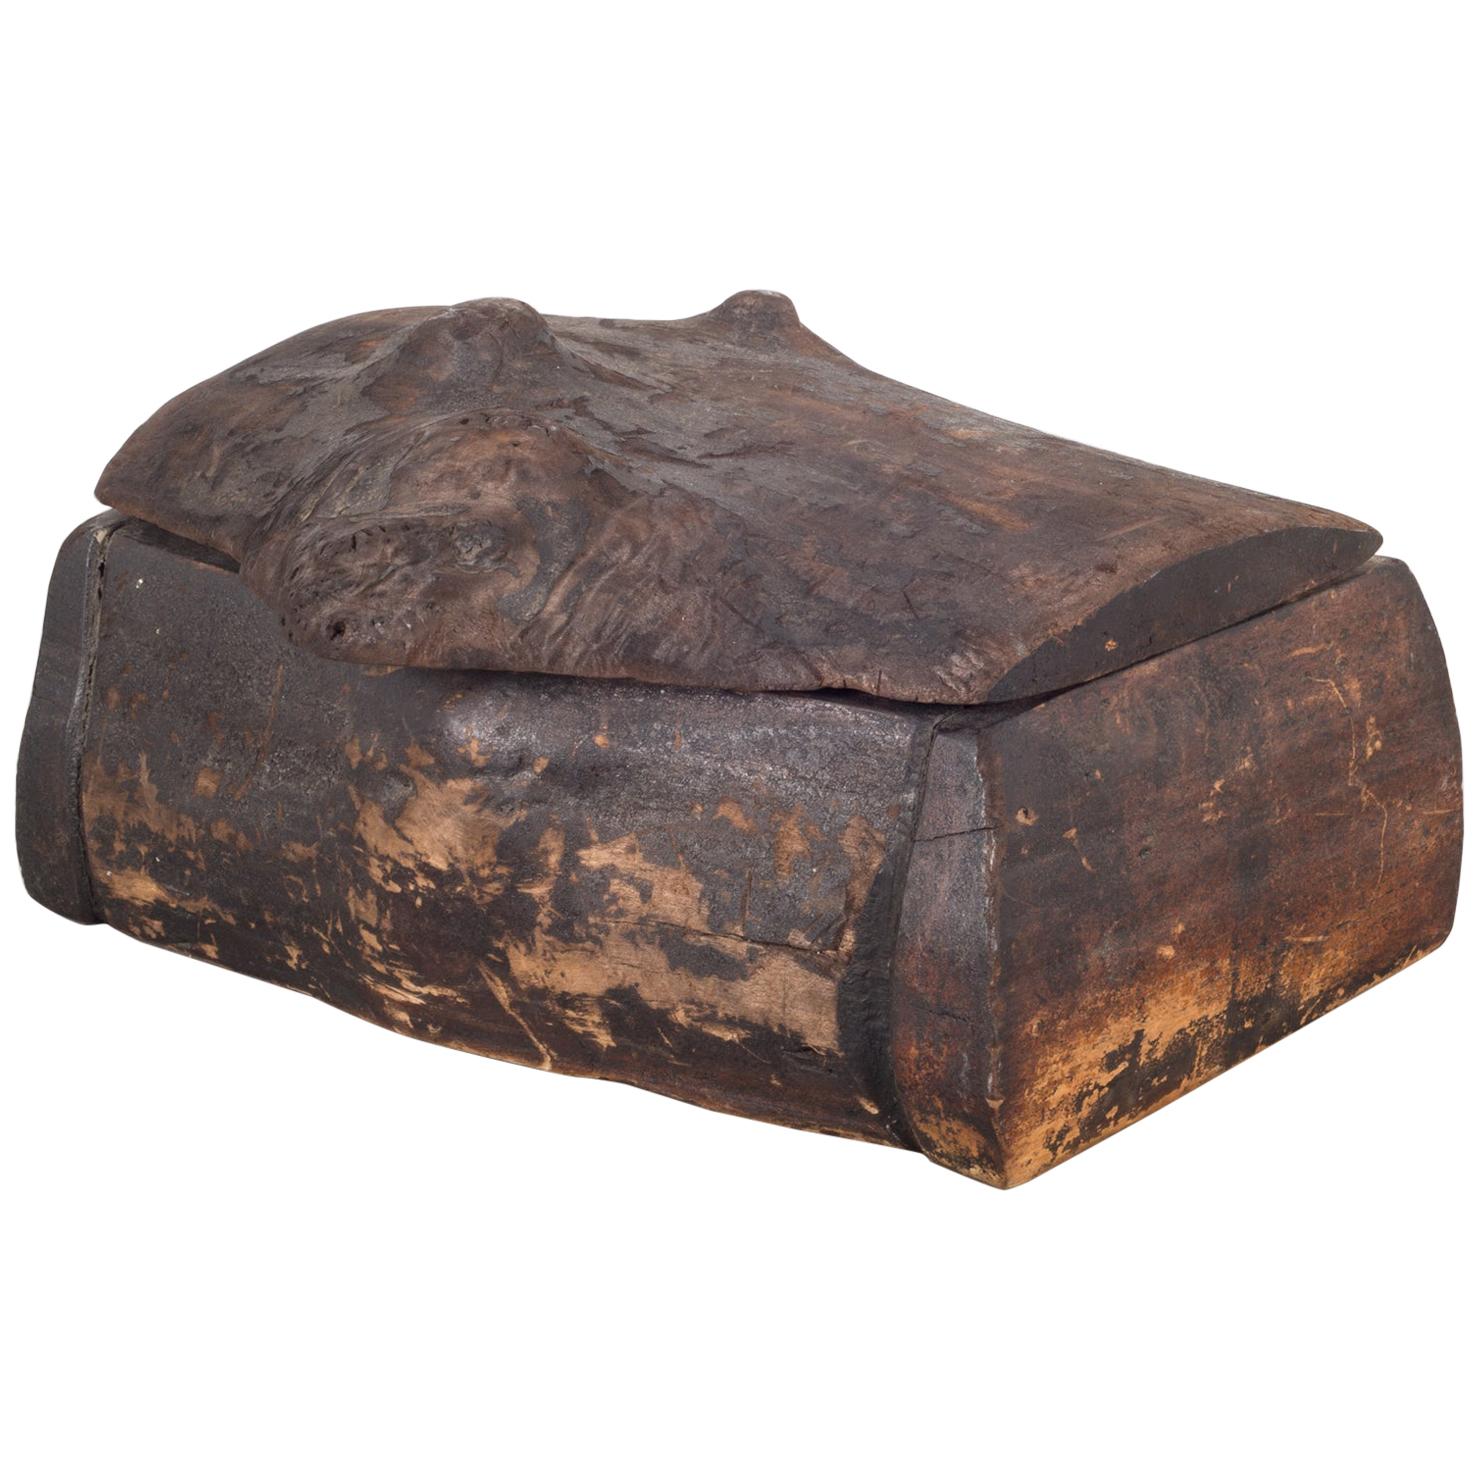 Handmade Rustic Wooden Box, circa 1940-1960